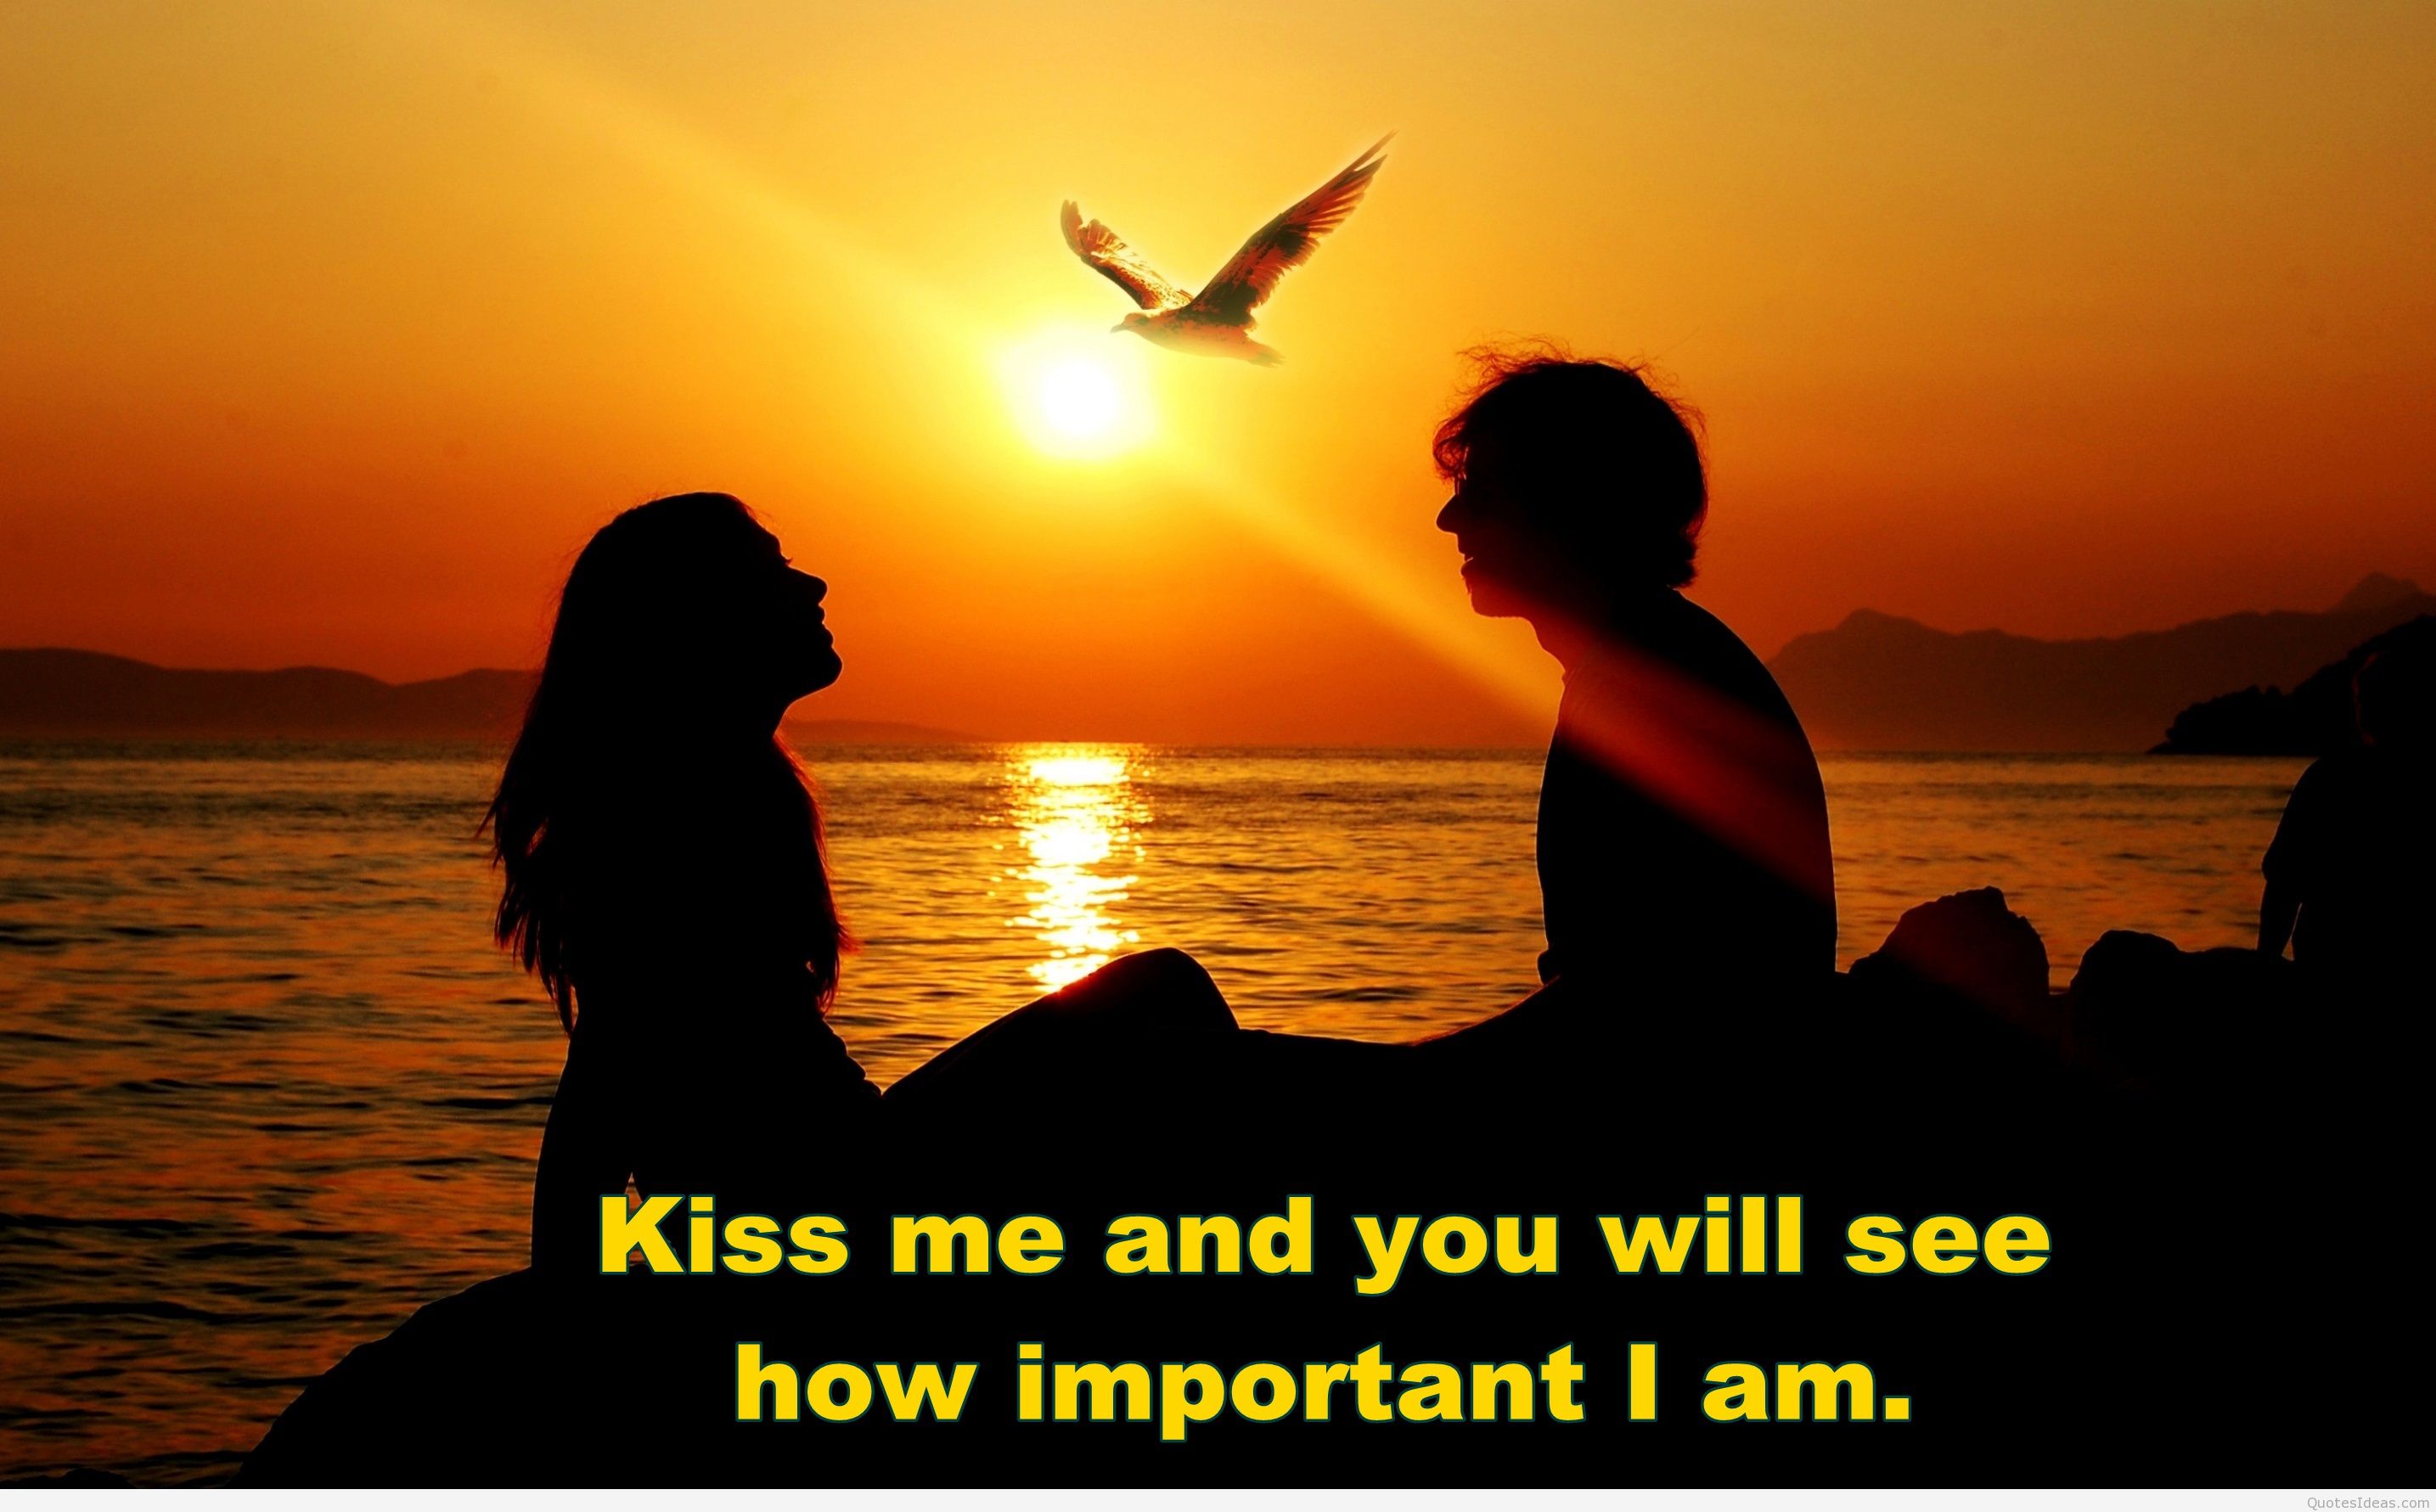 Amazing Romantic Quote Free Download Wallpaper - Download Romantic Images With Quotes - HD Wallpaper 